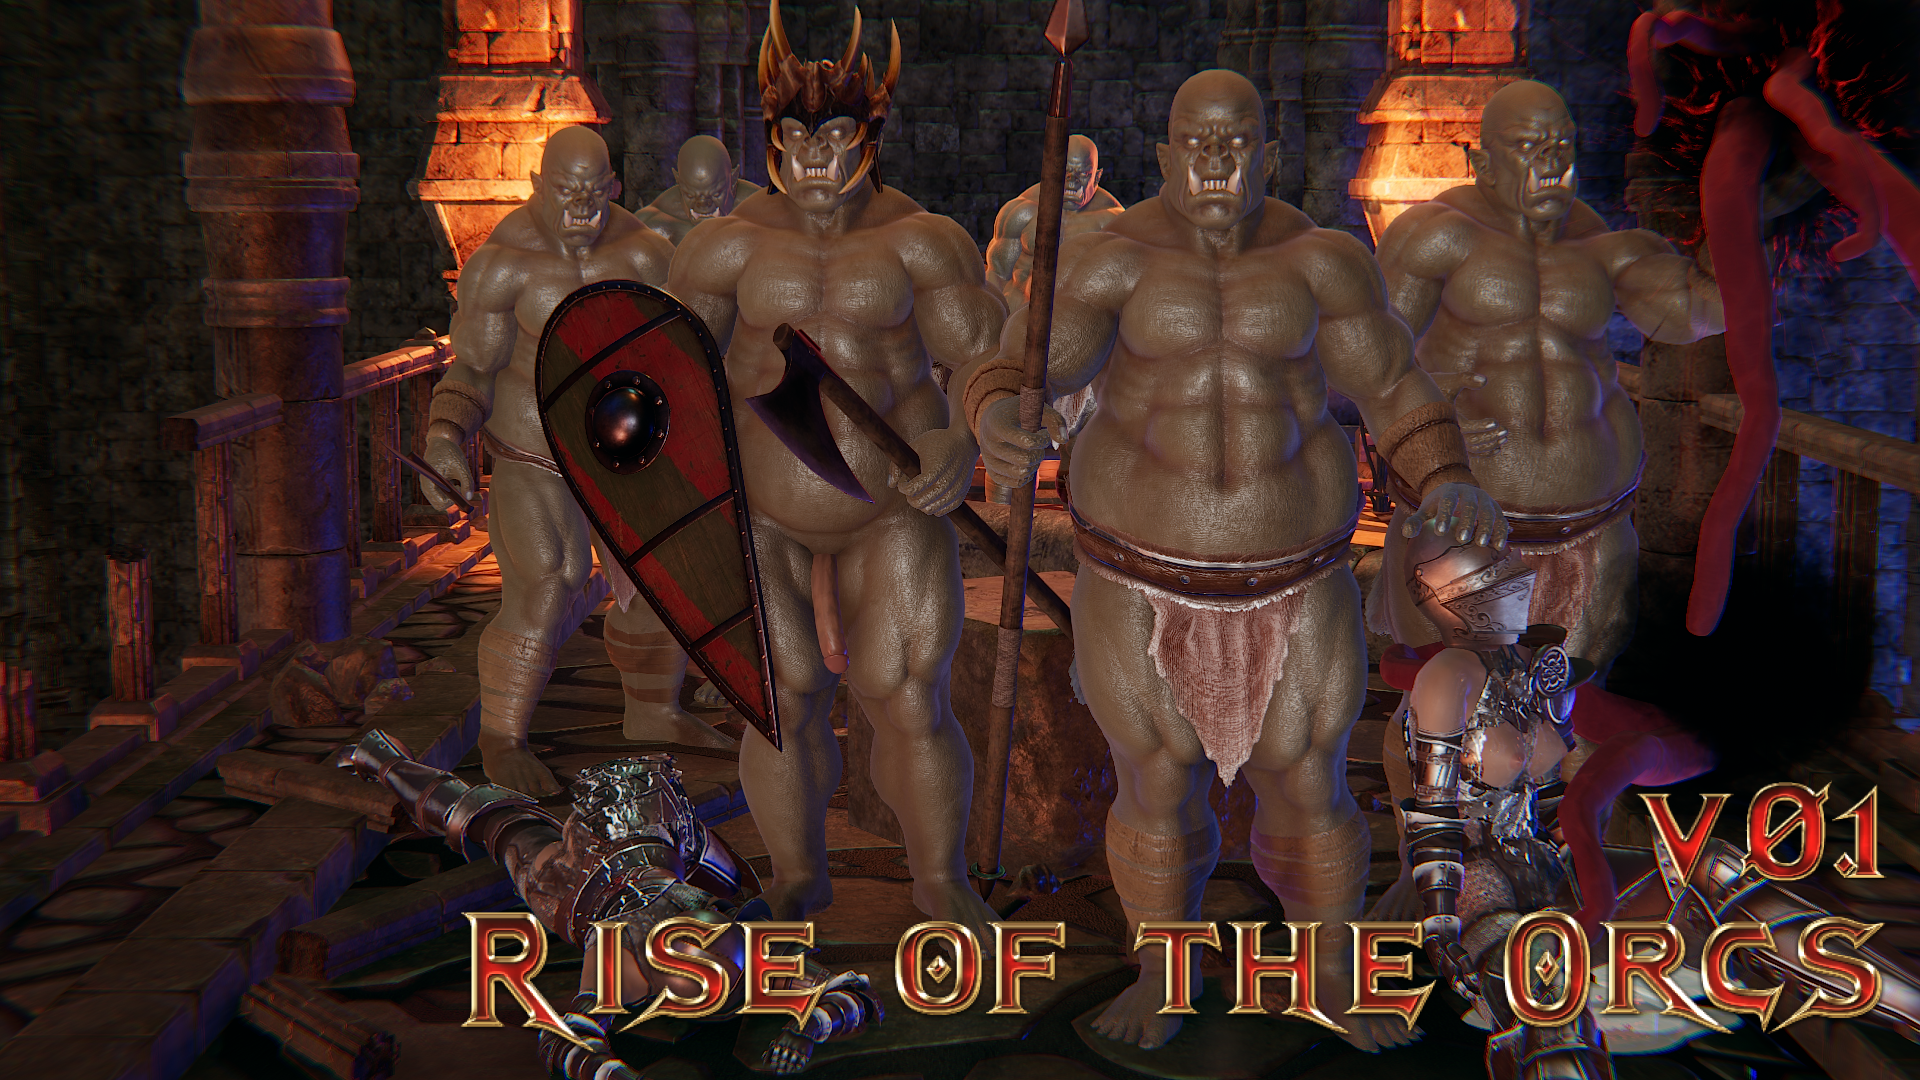 Orc Sex - Rise of the orcs v0.1 - free game download, reviews, mega - xGames